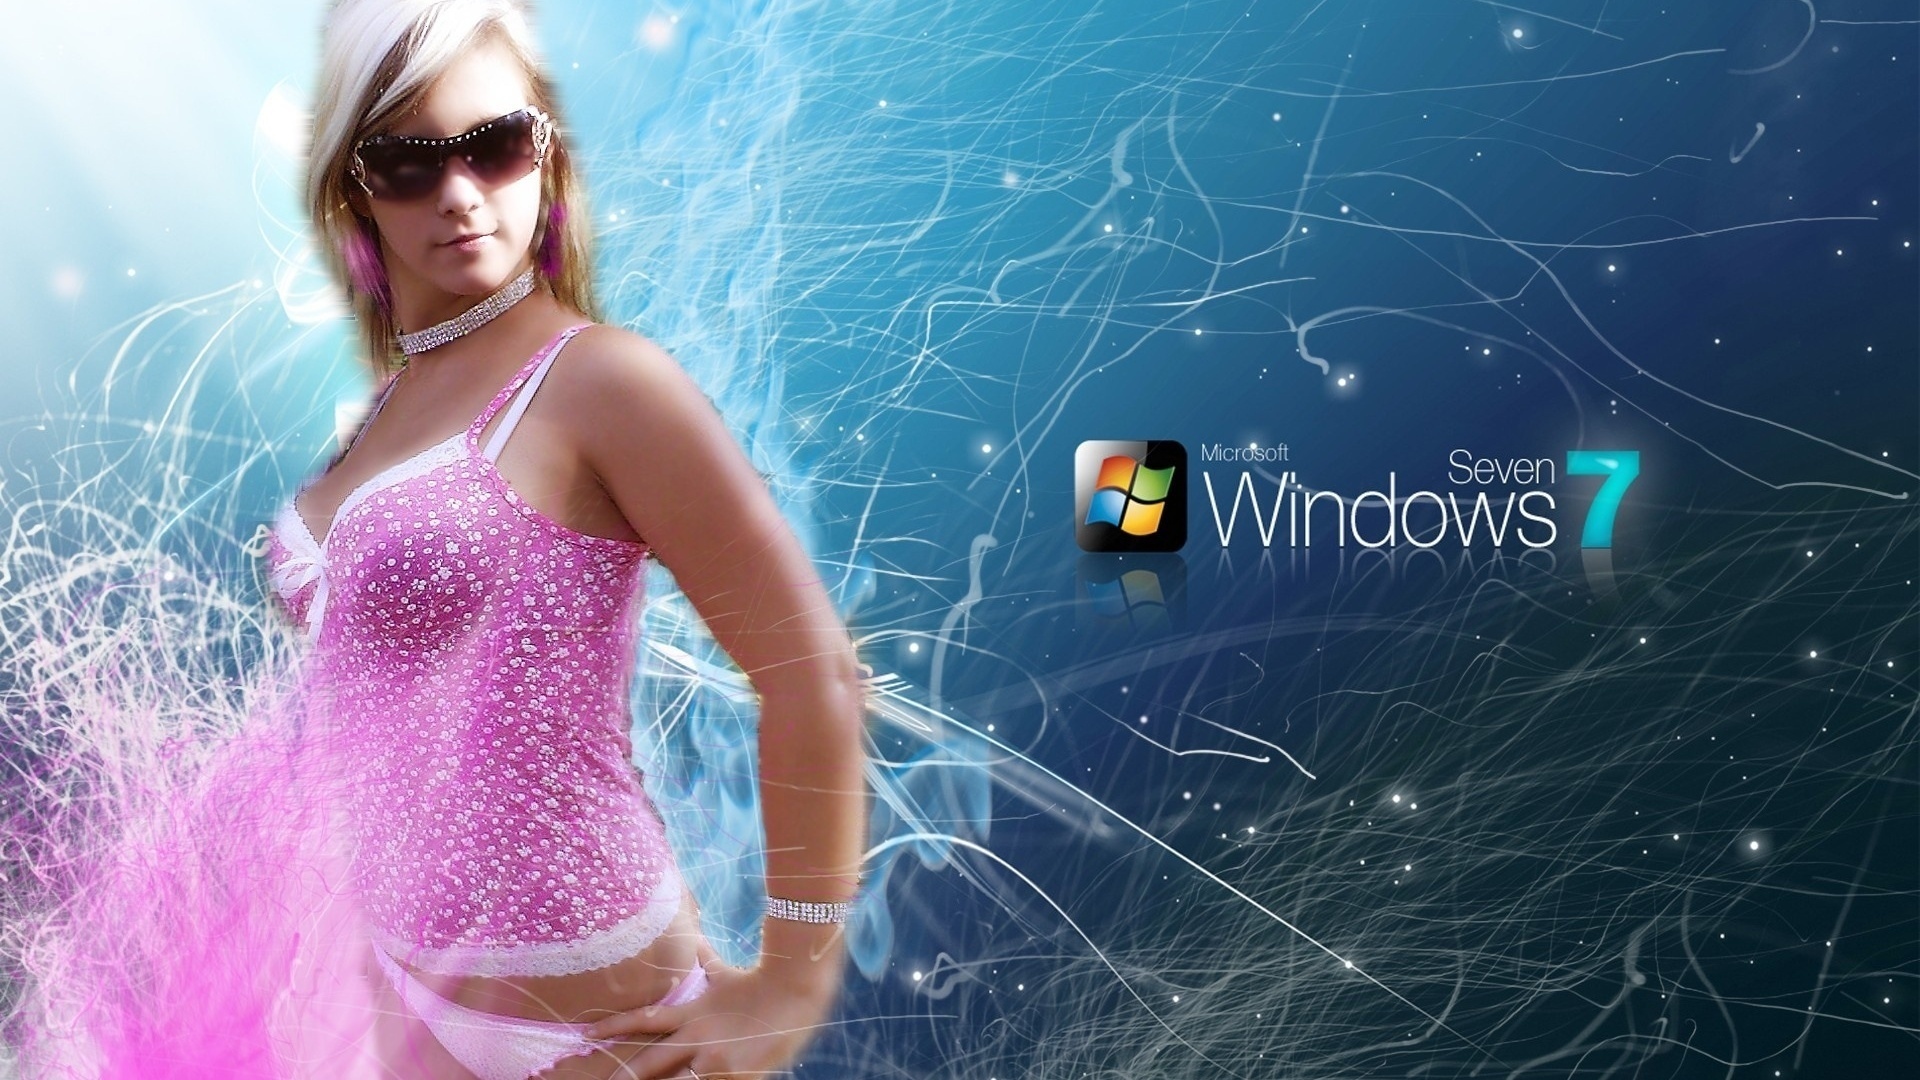 Microsoft Windows Windows 7 Logo Women Blonde Sunglasses Hands On Legs Bracelets 1920x1080